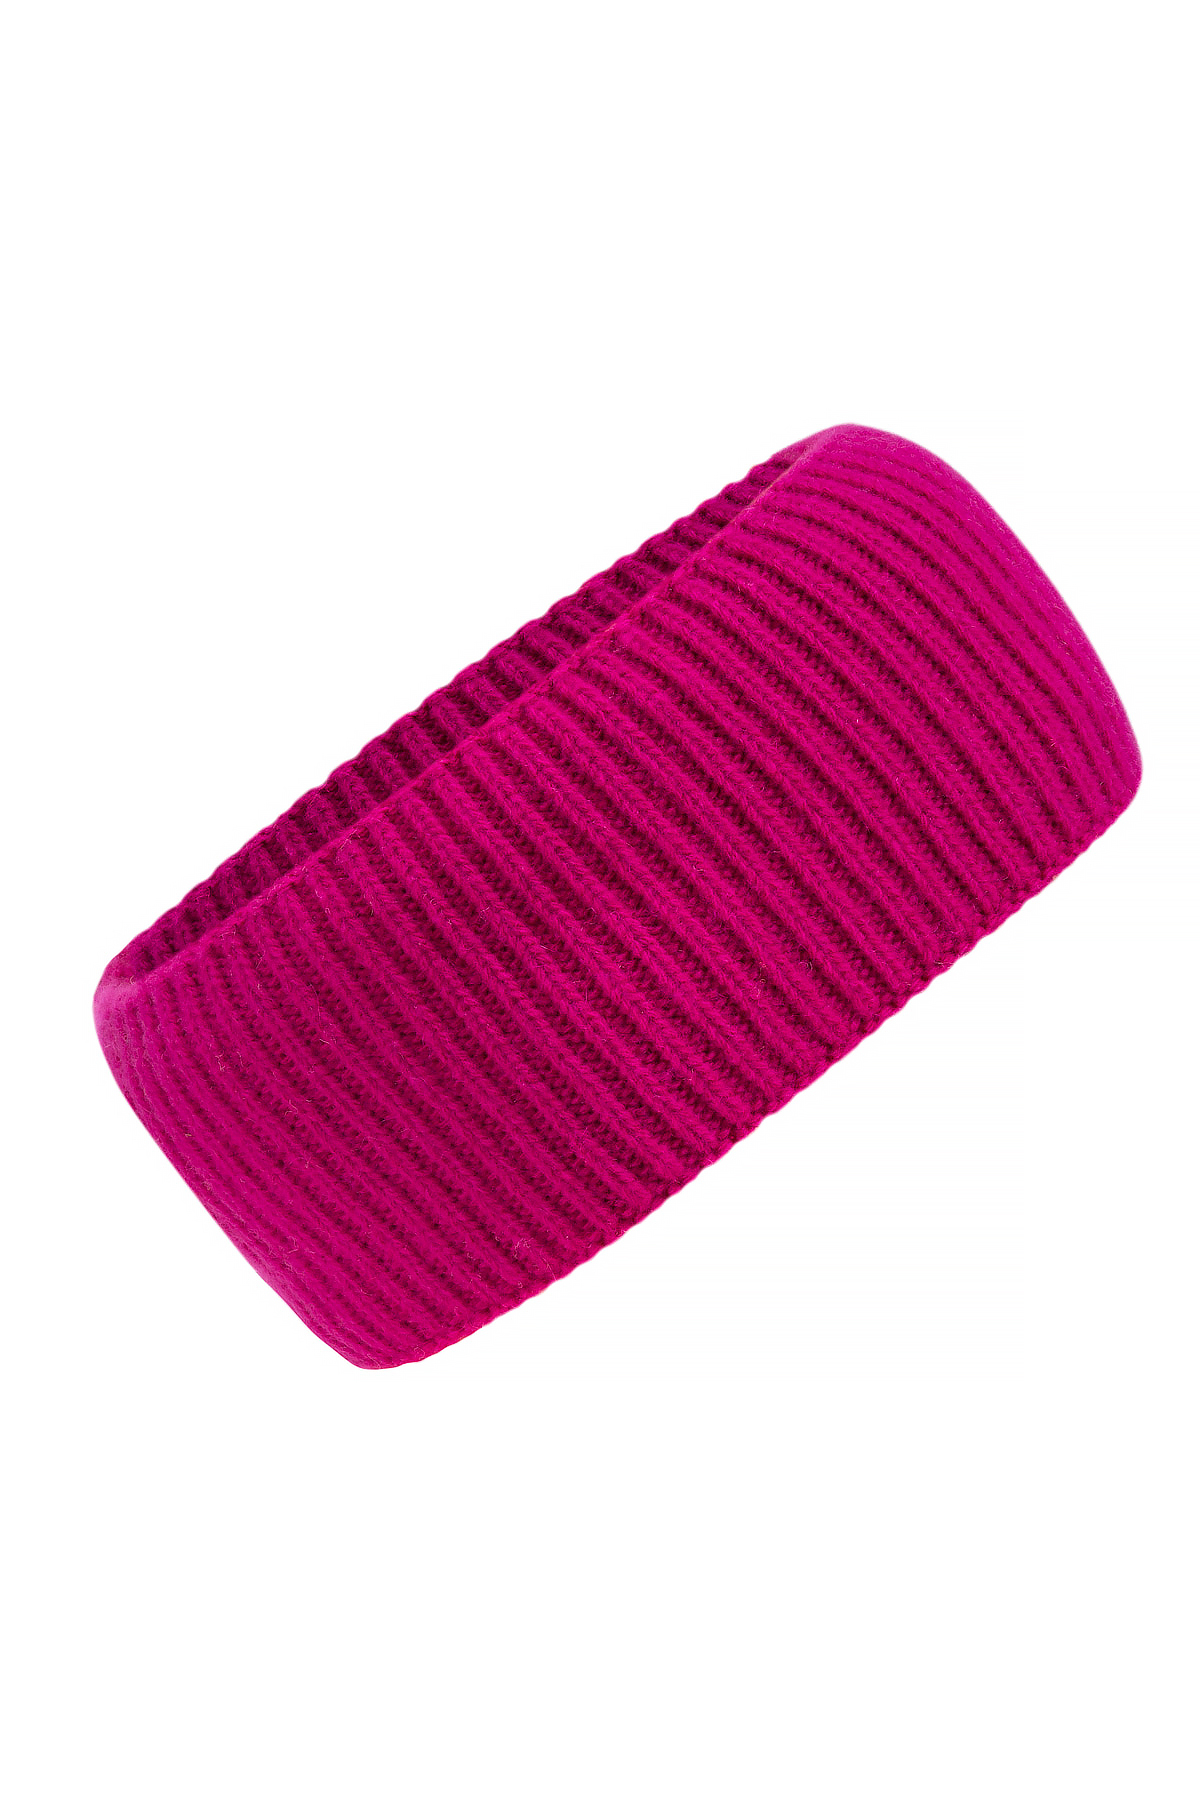 Image of a purple headband